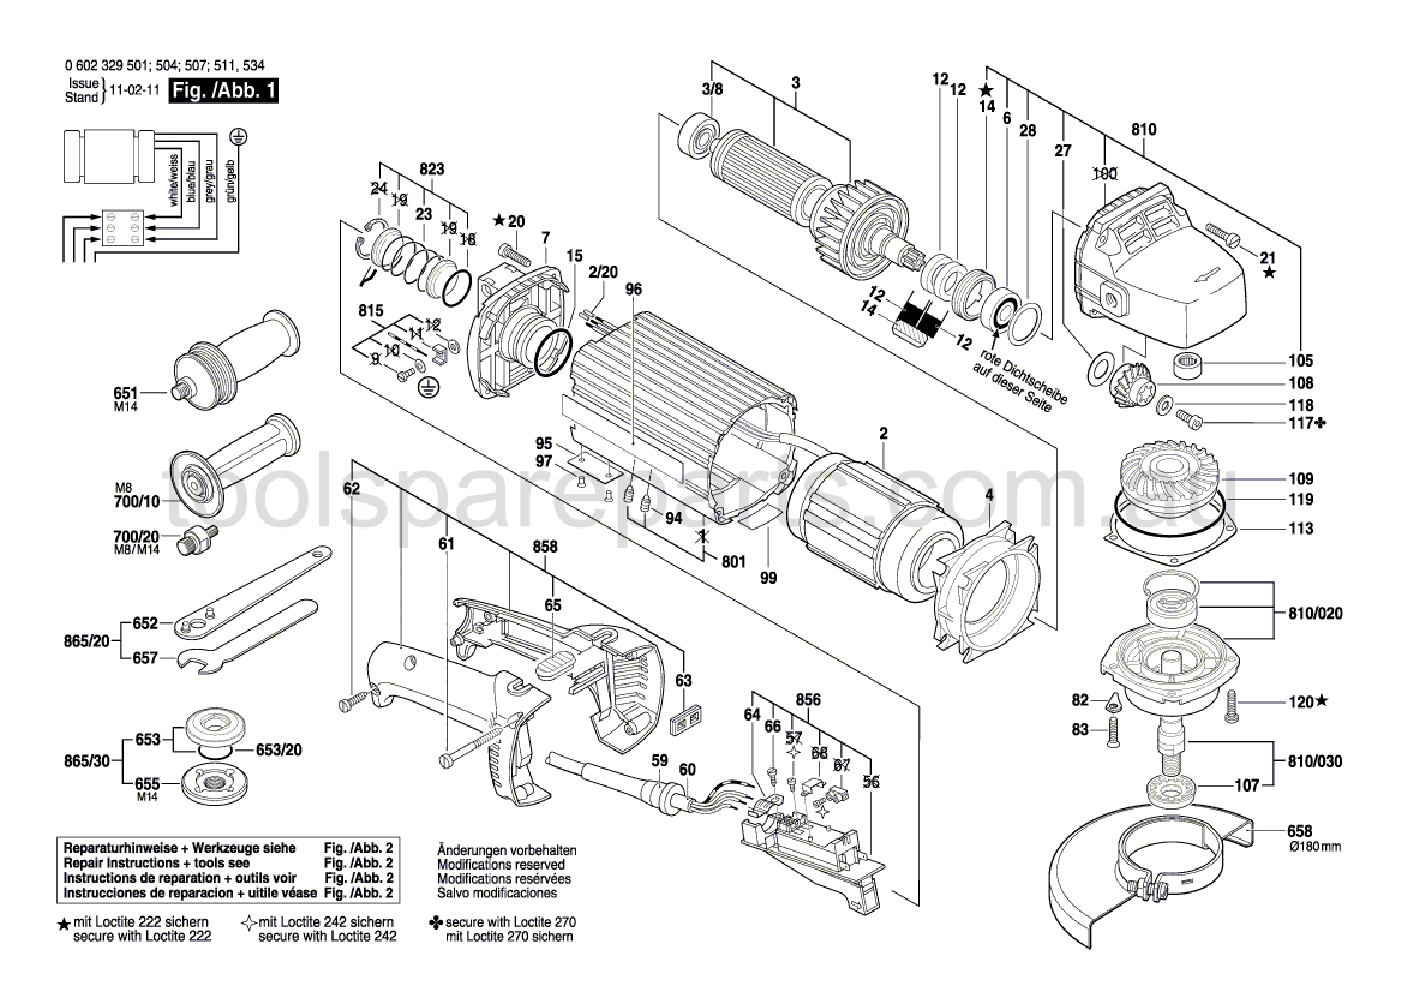 Bosch HWS 85/180 0602329501  Diagram 1